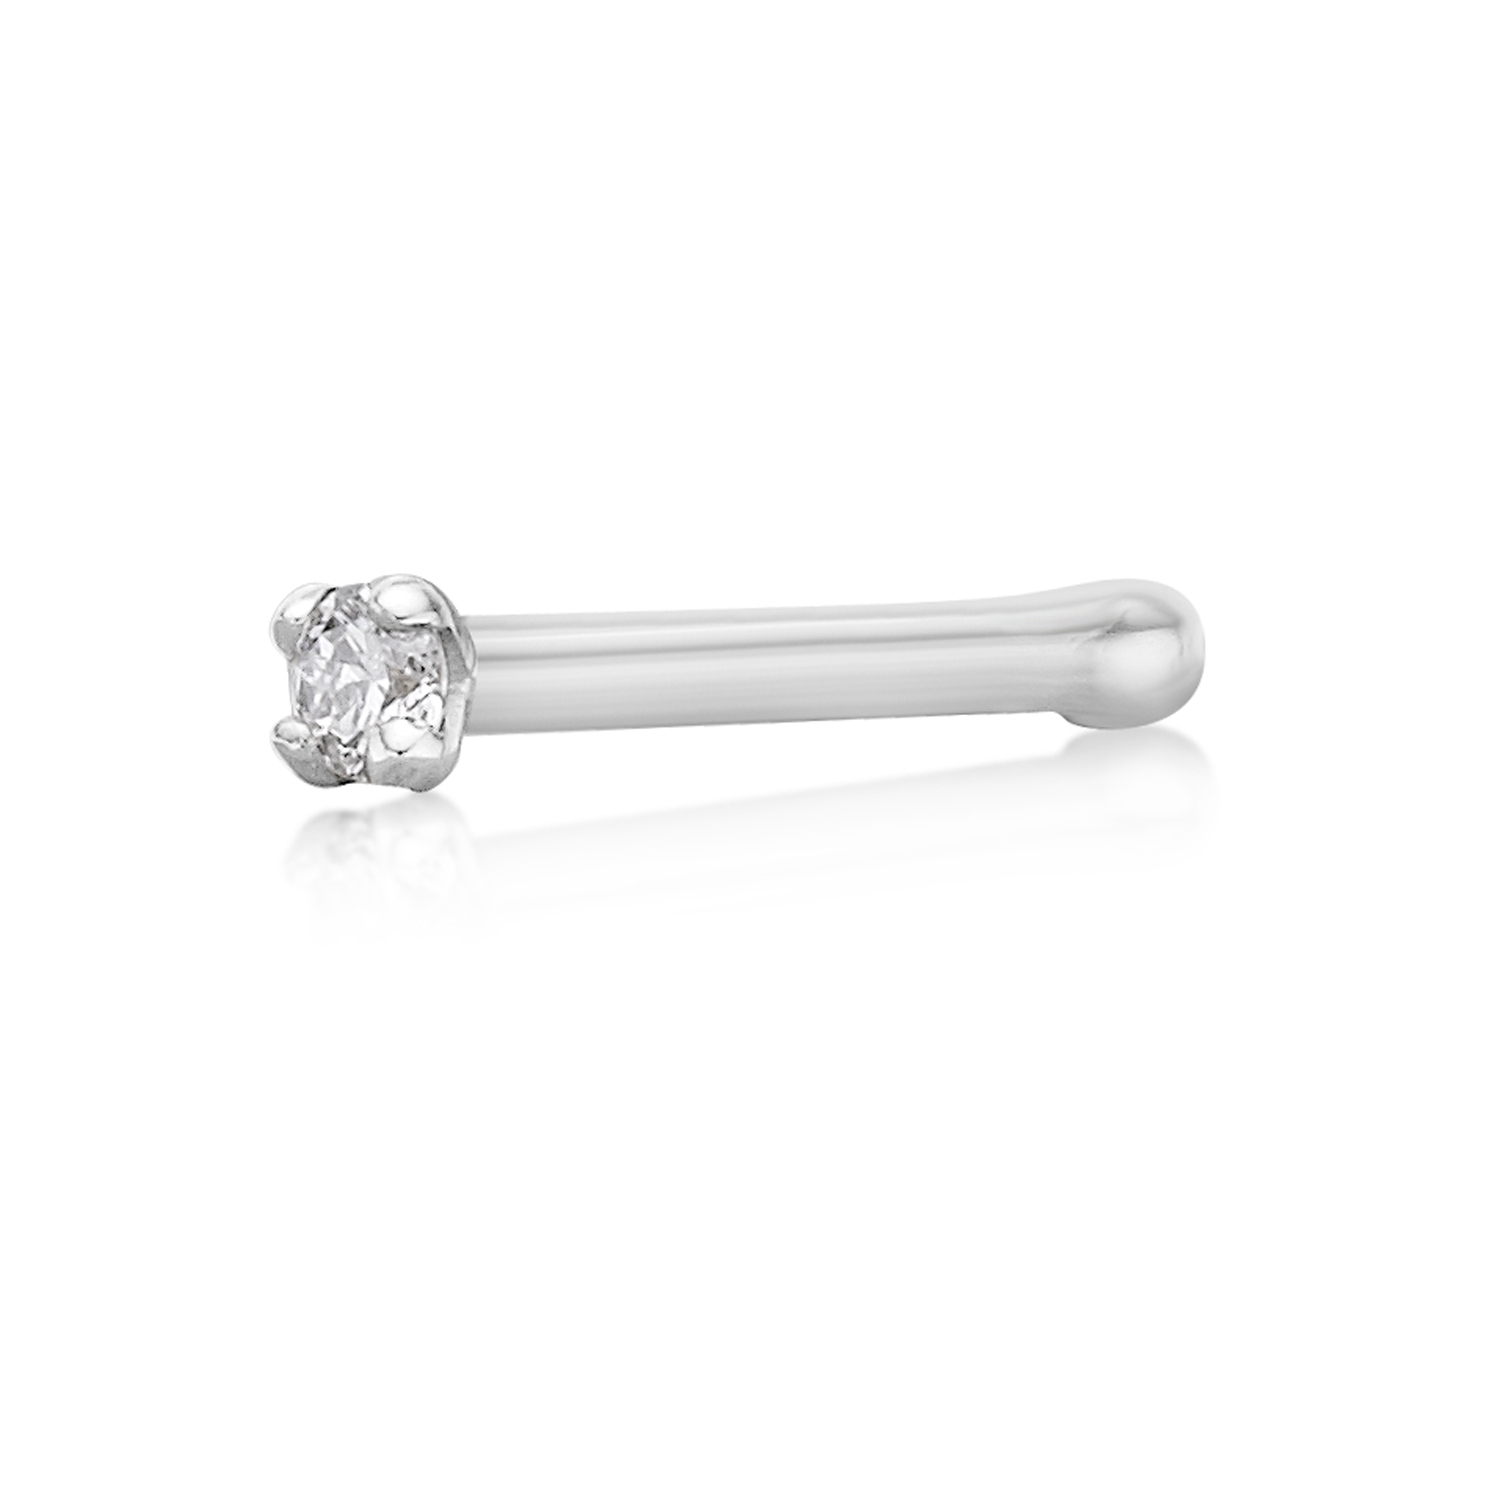 Lavari Jewelers Women's Diamond Stud Nose Ring, 14K White Gold, .01 Carat, 22 Gauge, 1.3 MM